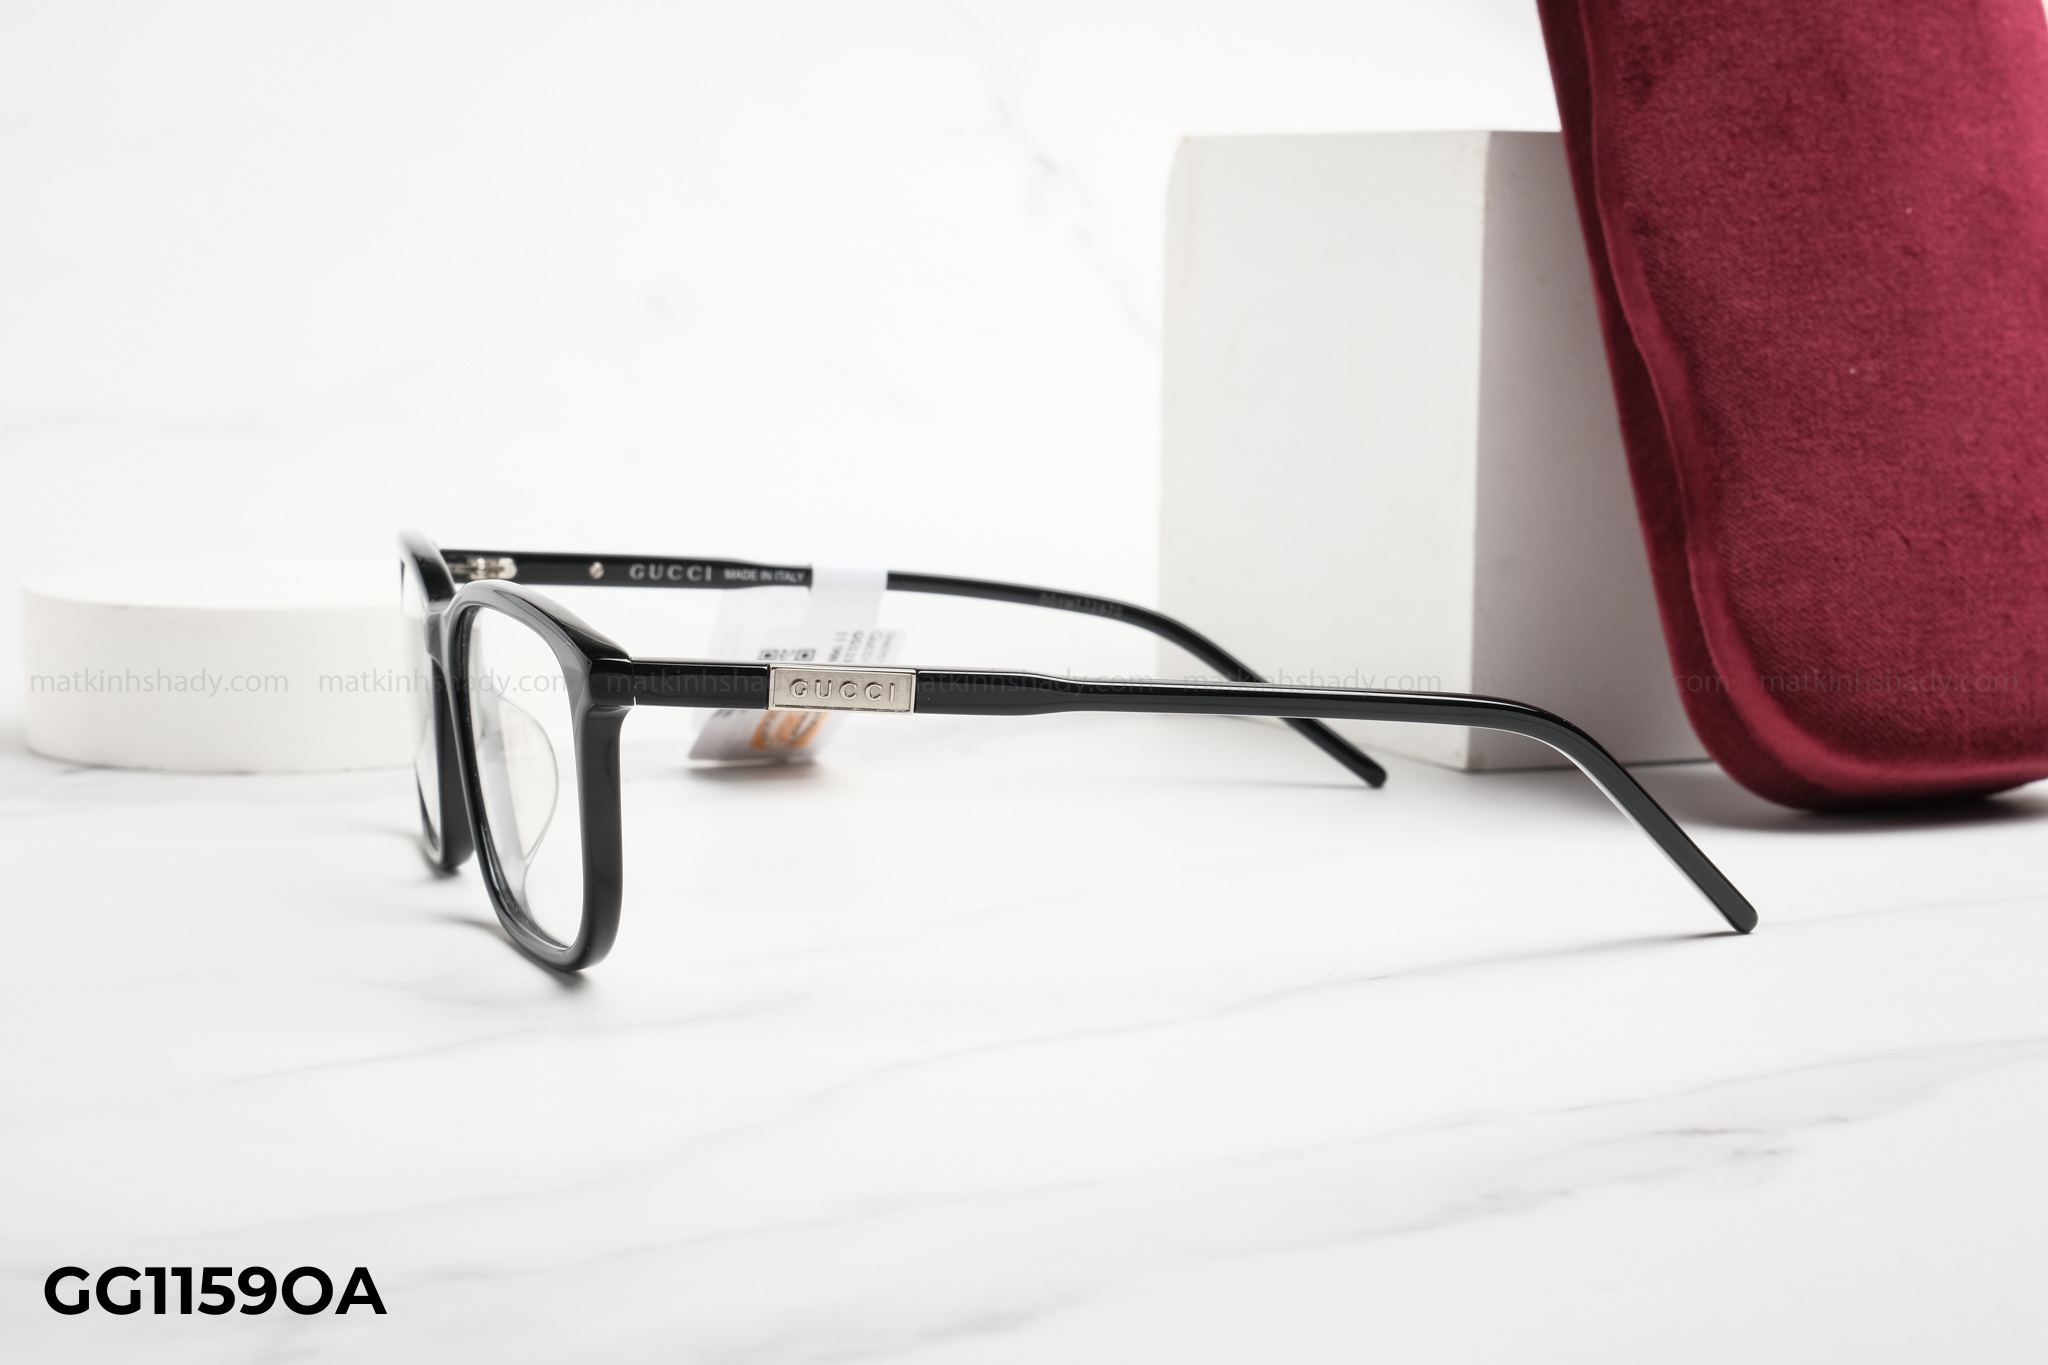  Gucci Eyewear - Glasses - GG1159OA 